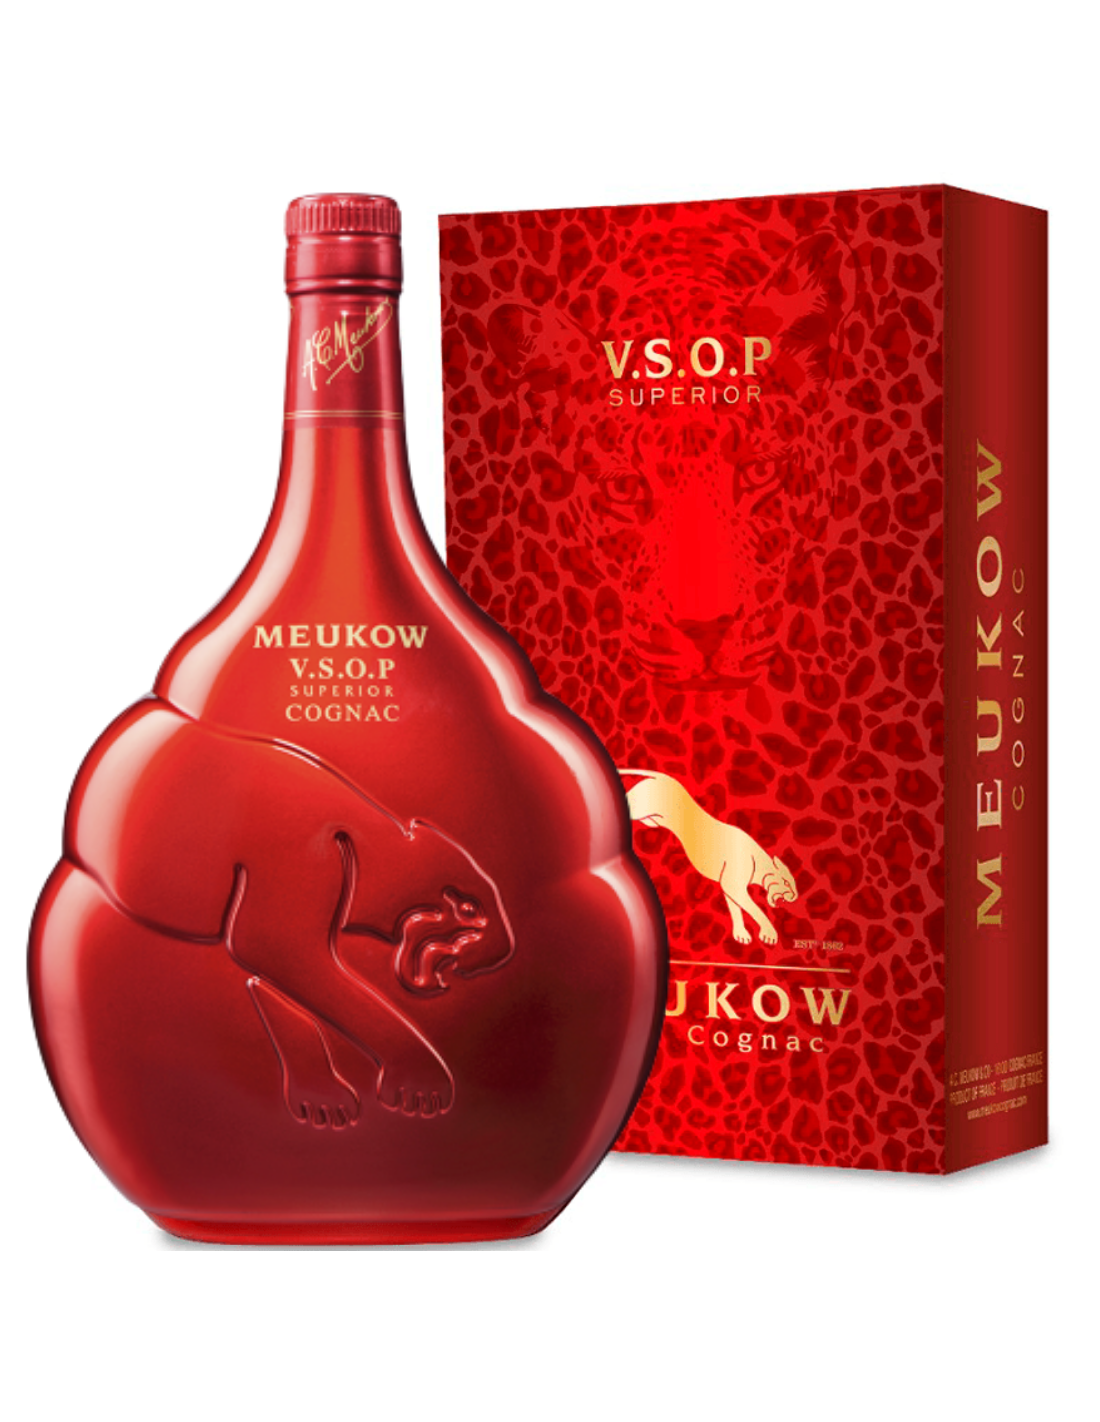 Coniac Meukow V.S.O.P Superior Red Edition, 40% alc., 0.7L, Franta alcooldiscount.ro